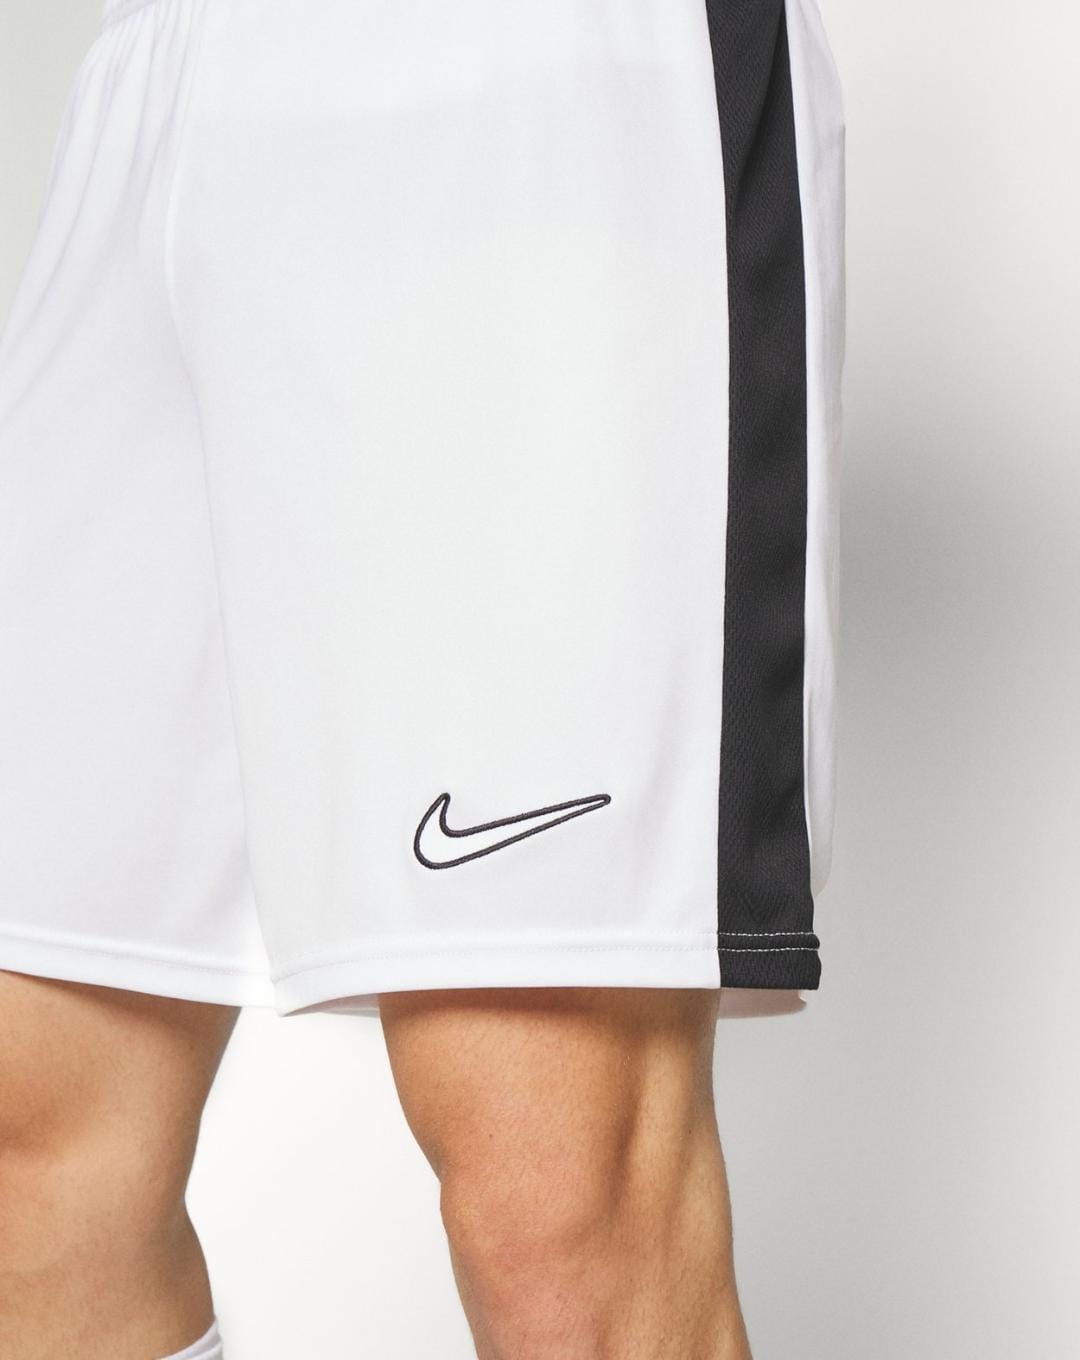 Nike Dri-fit Sports Shorts - White